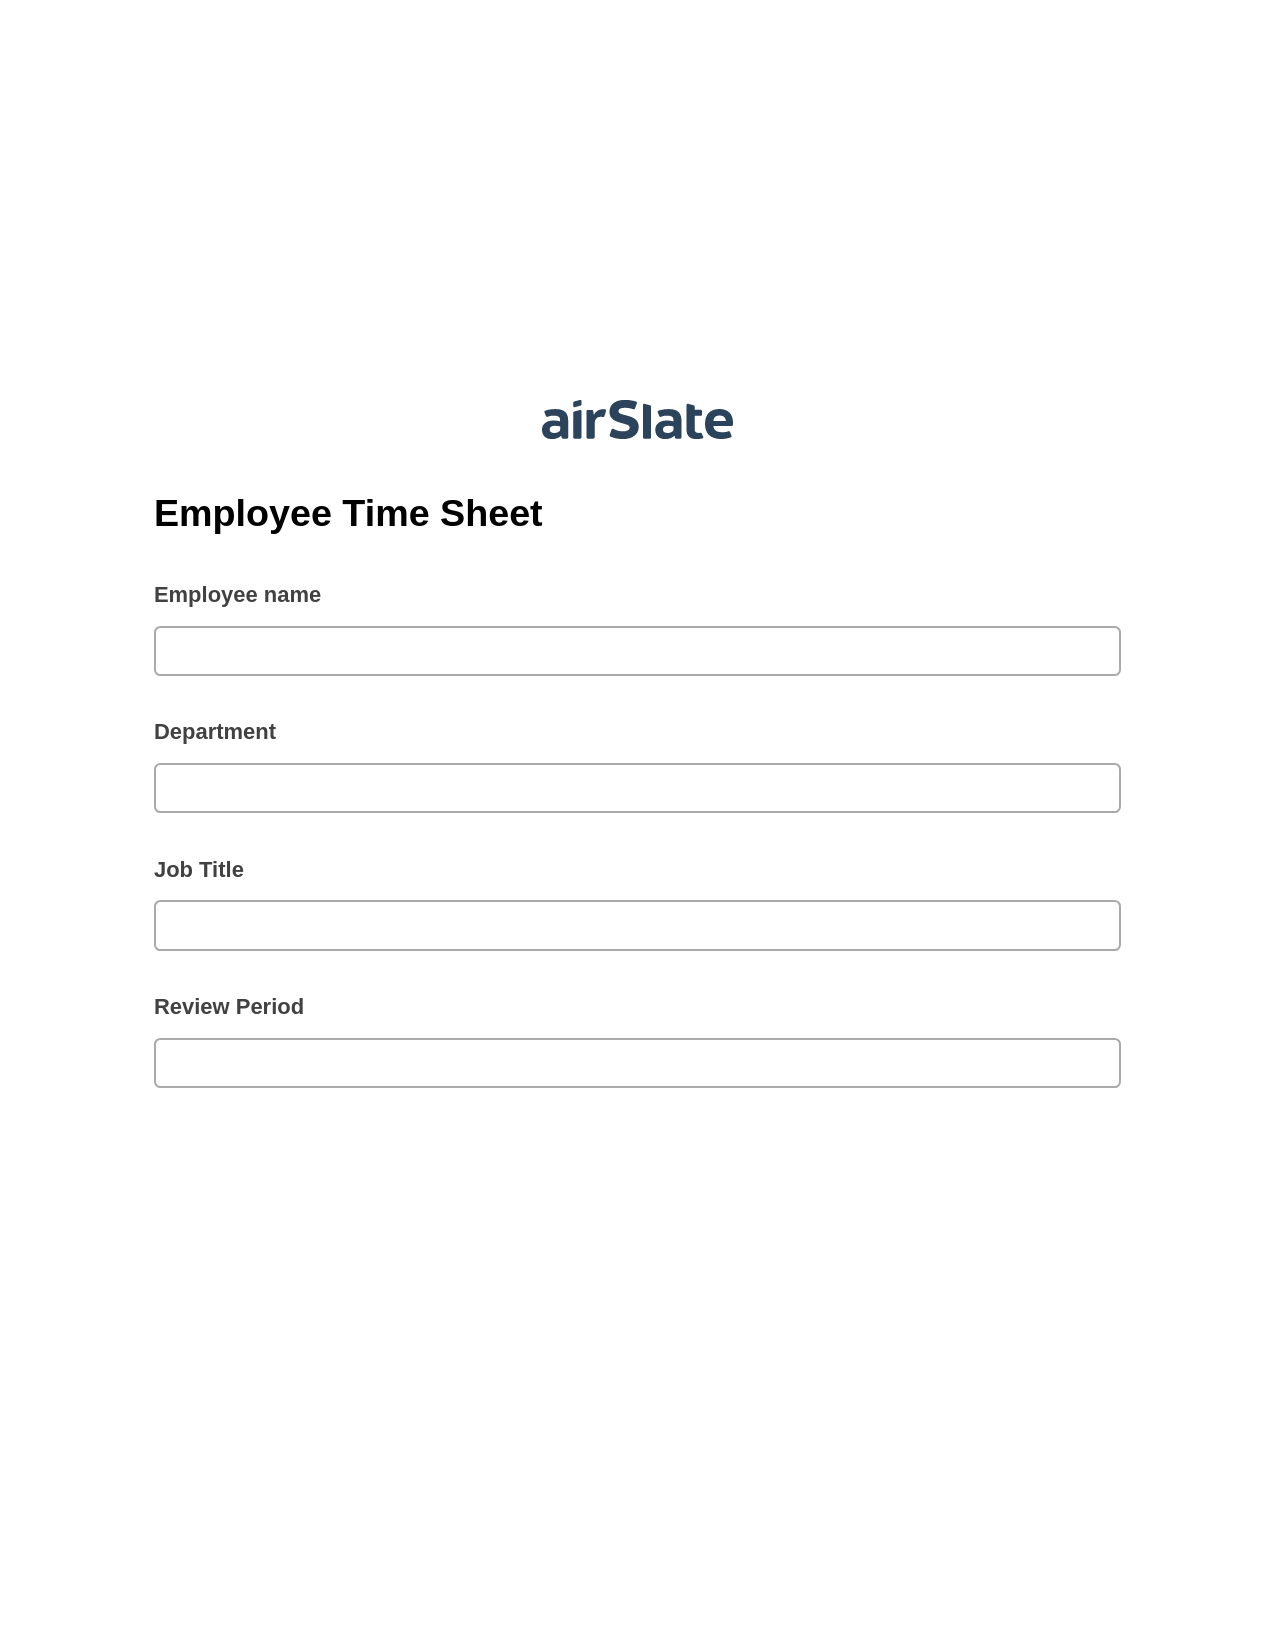 Multirole Employee Time Sheet System Bot - Slack Two-Way Binding Bot, Create slate addon, Export to Excel 365 Bot